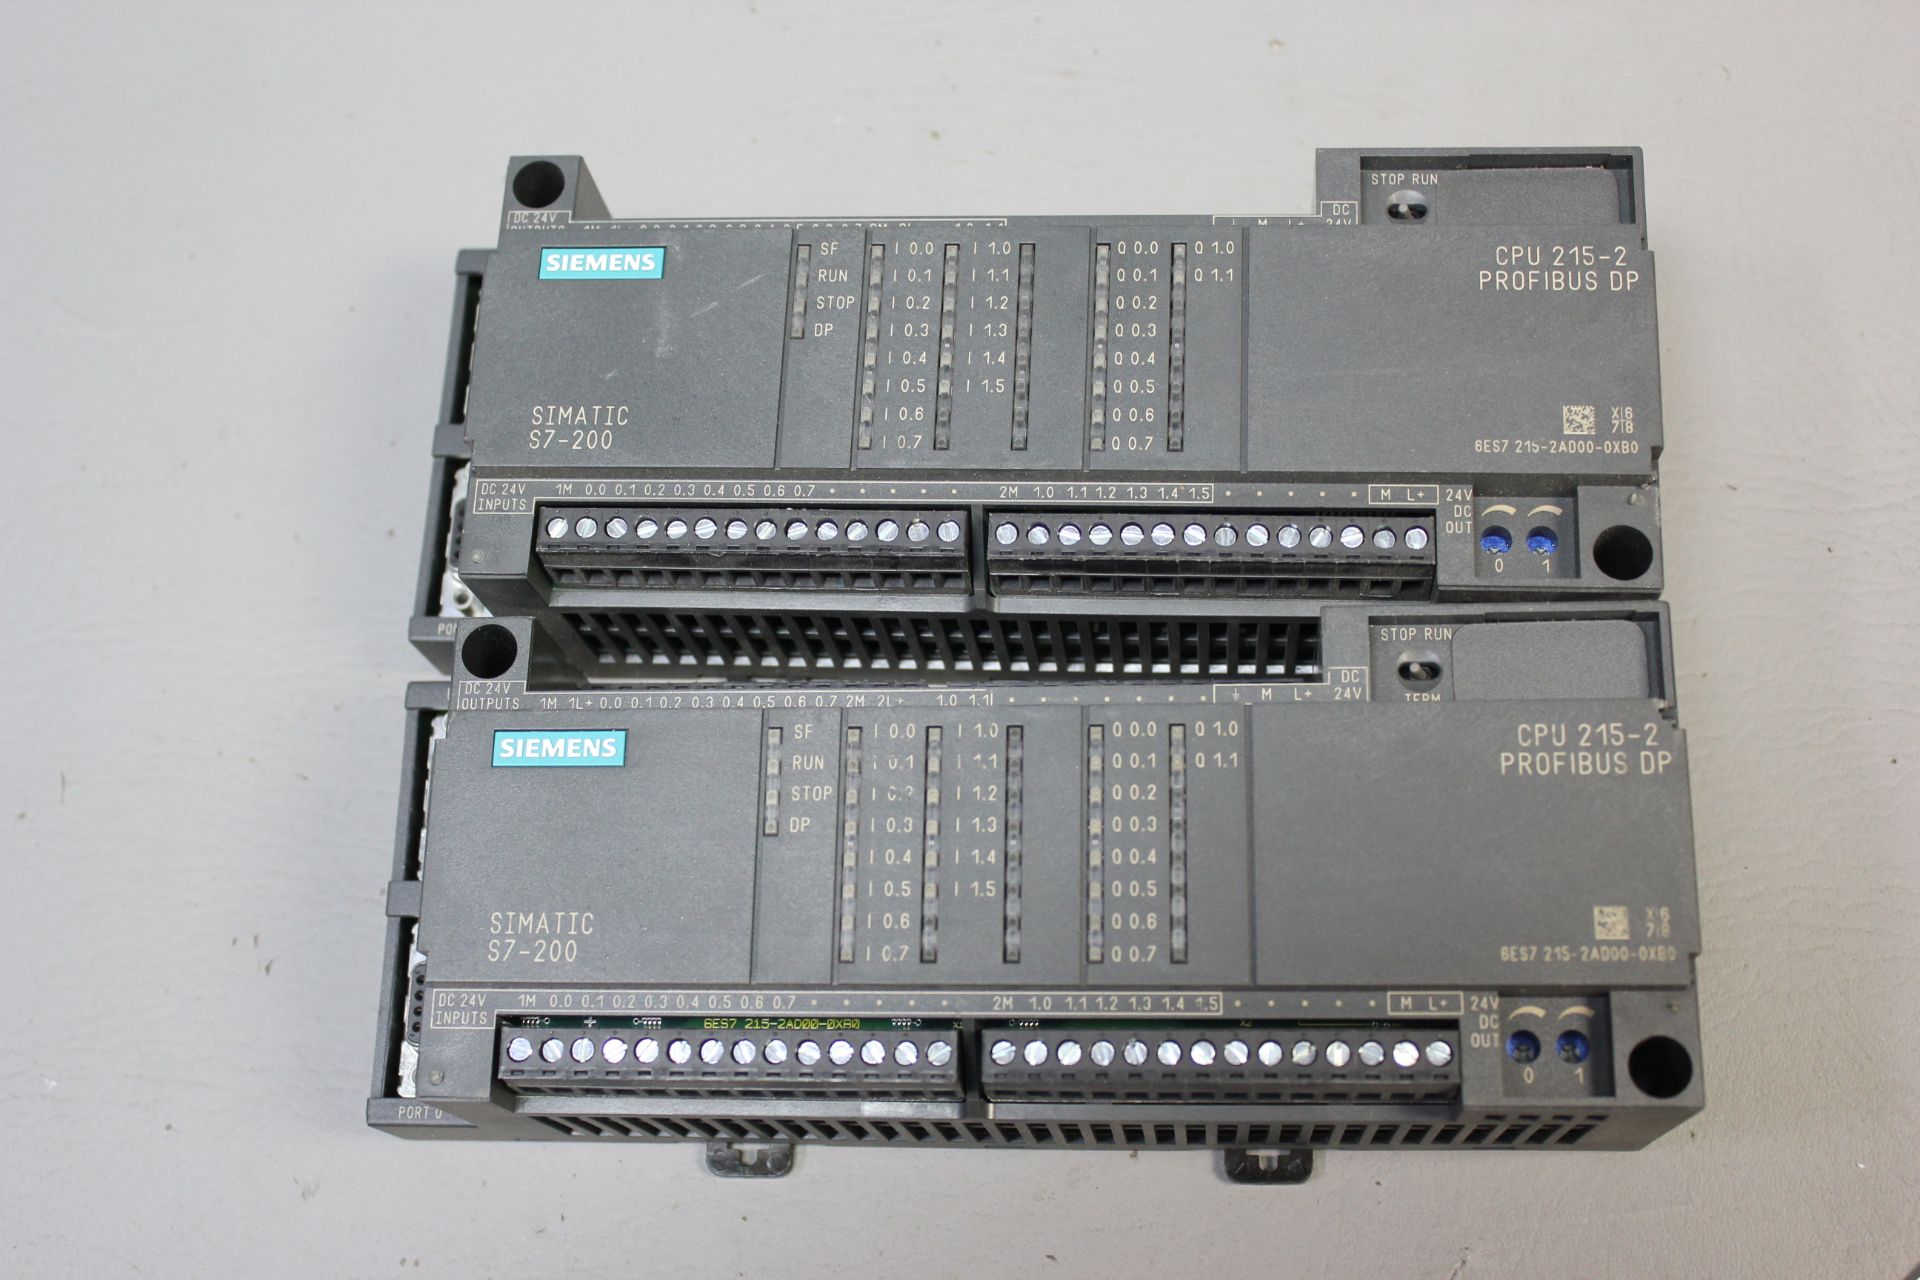 LOT OF 3 SIEMENS SIMATIC S7-200 CPU MODULES